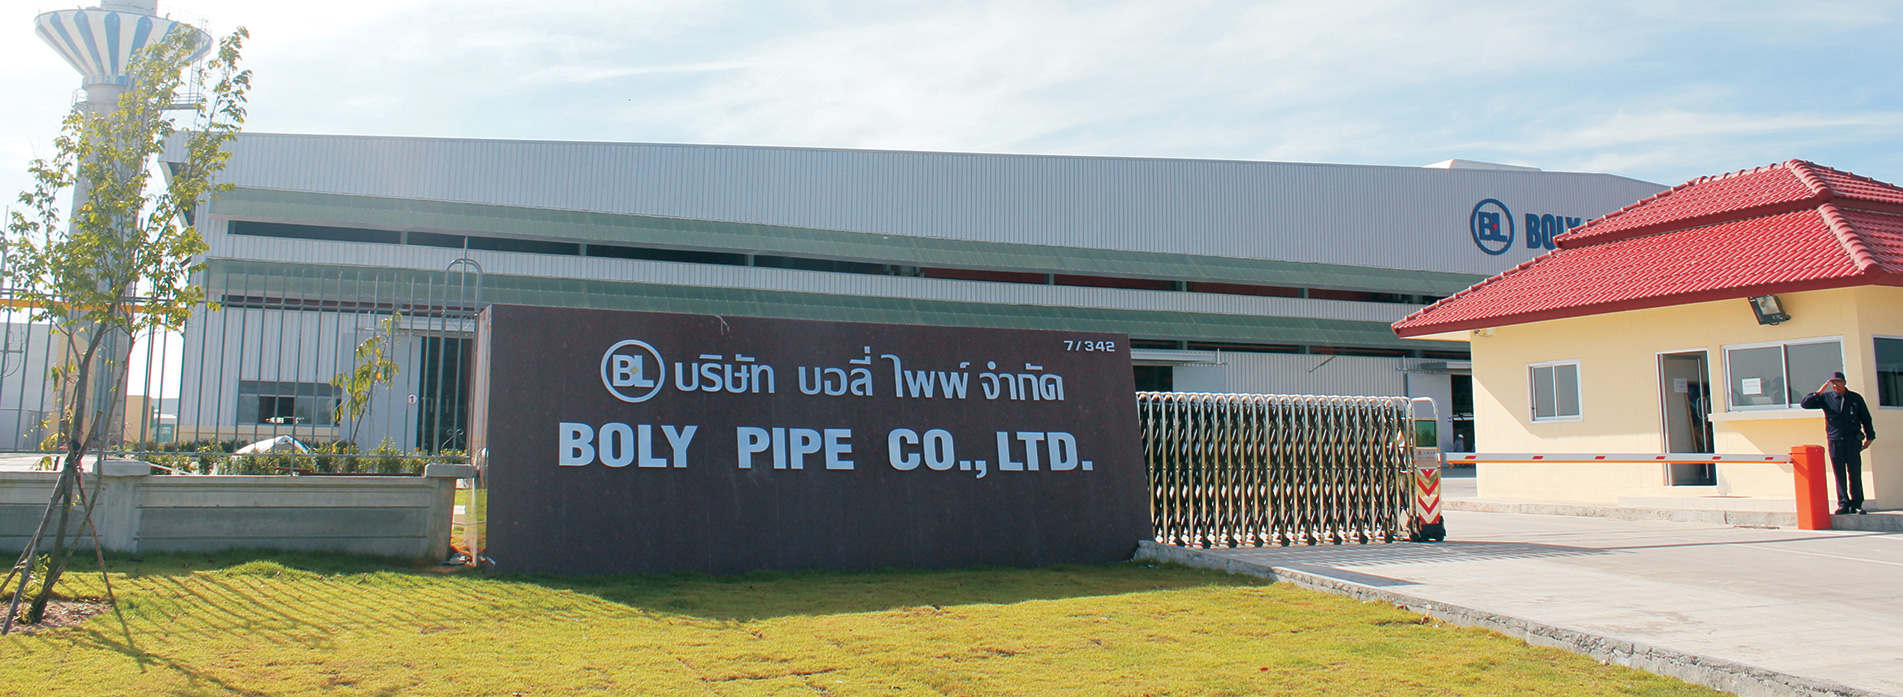 Boly Pipe(Thailand)Co.,Ltd was established on 26 th Mar.2012